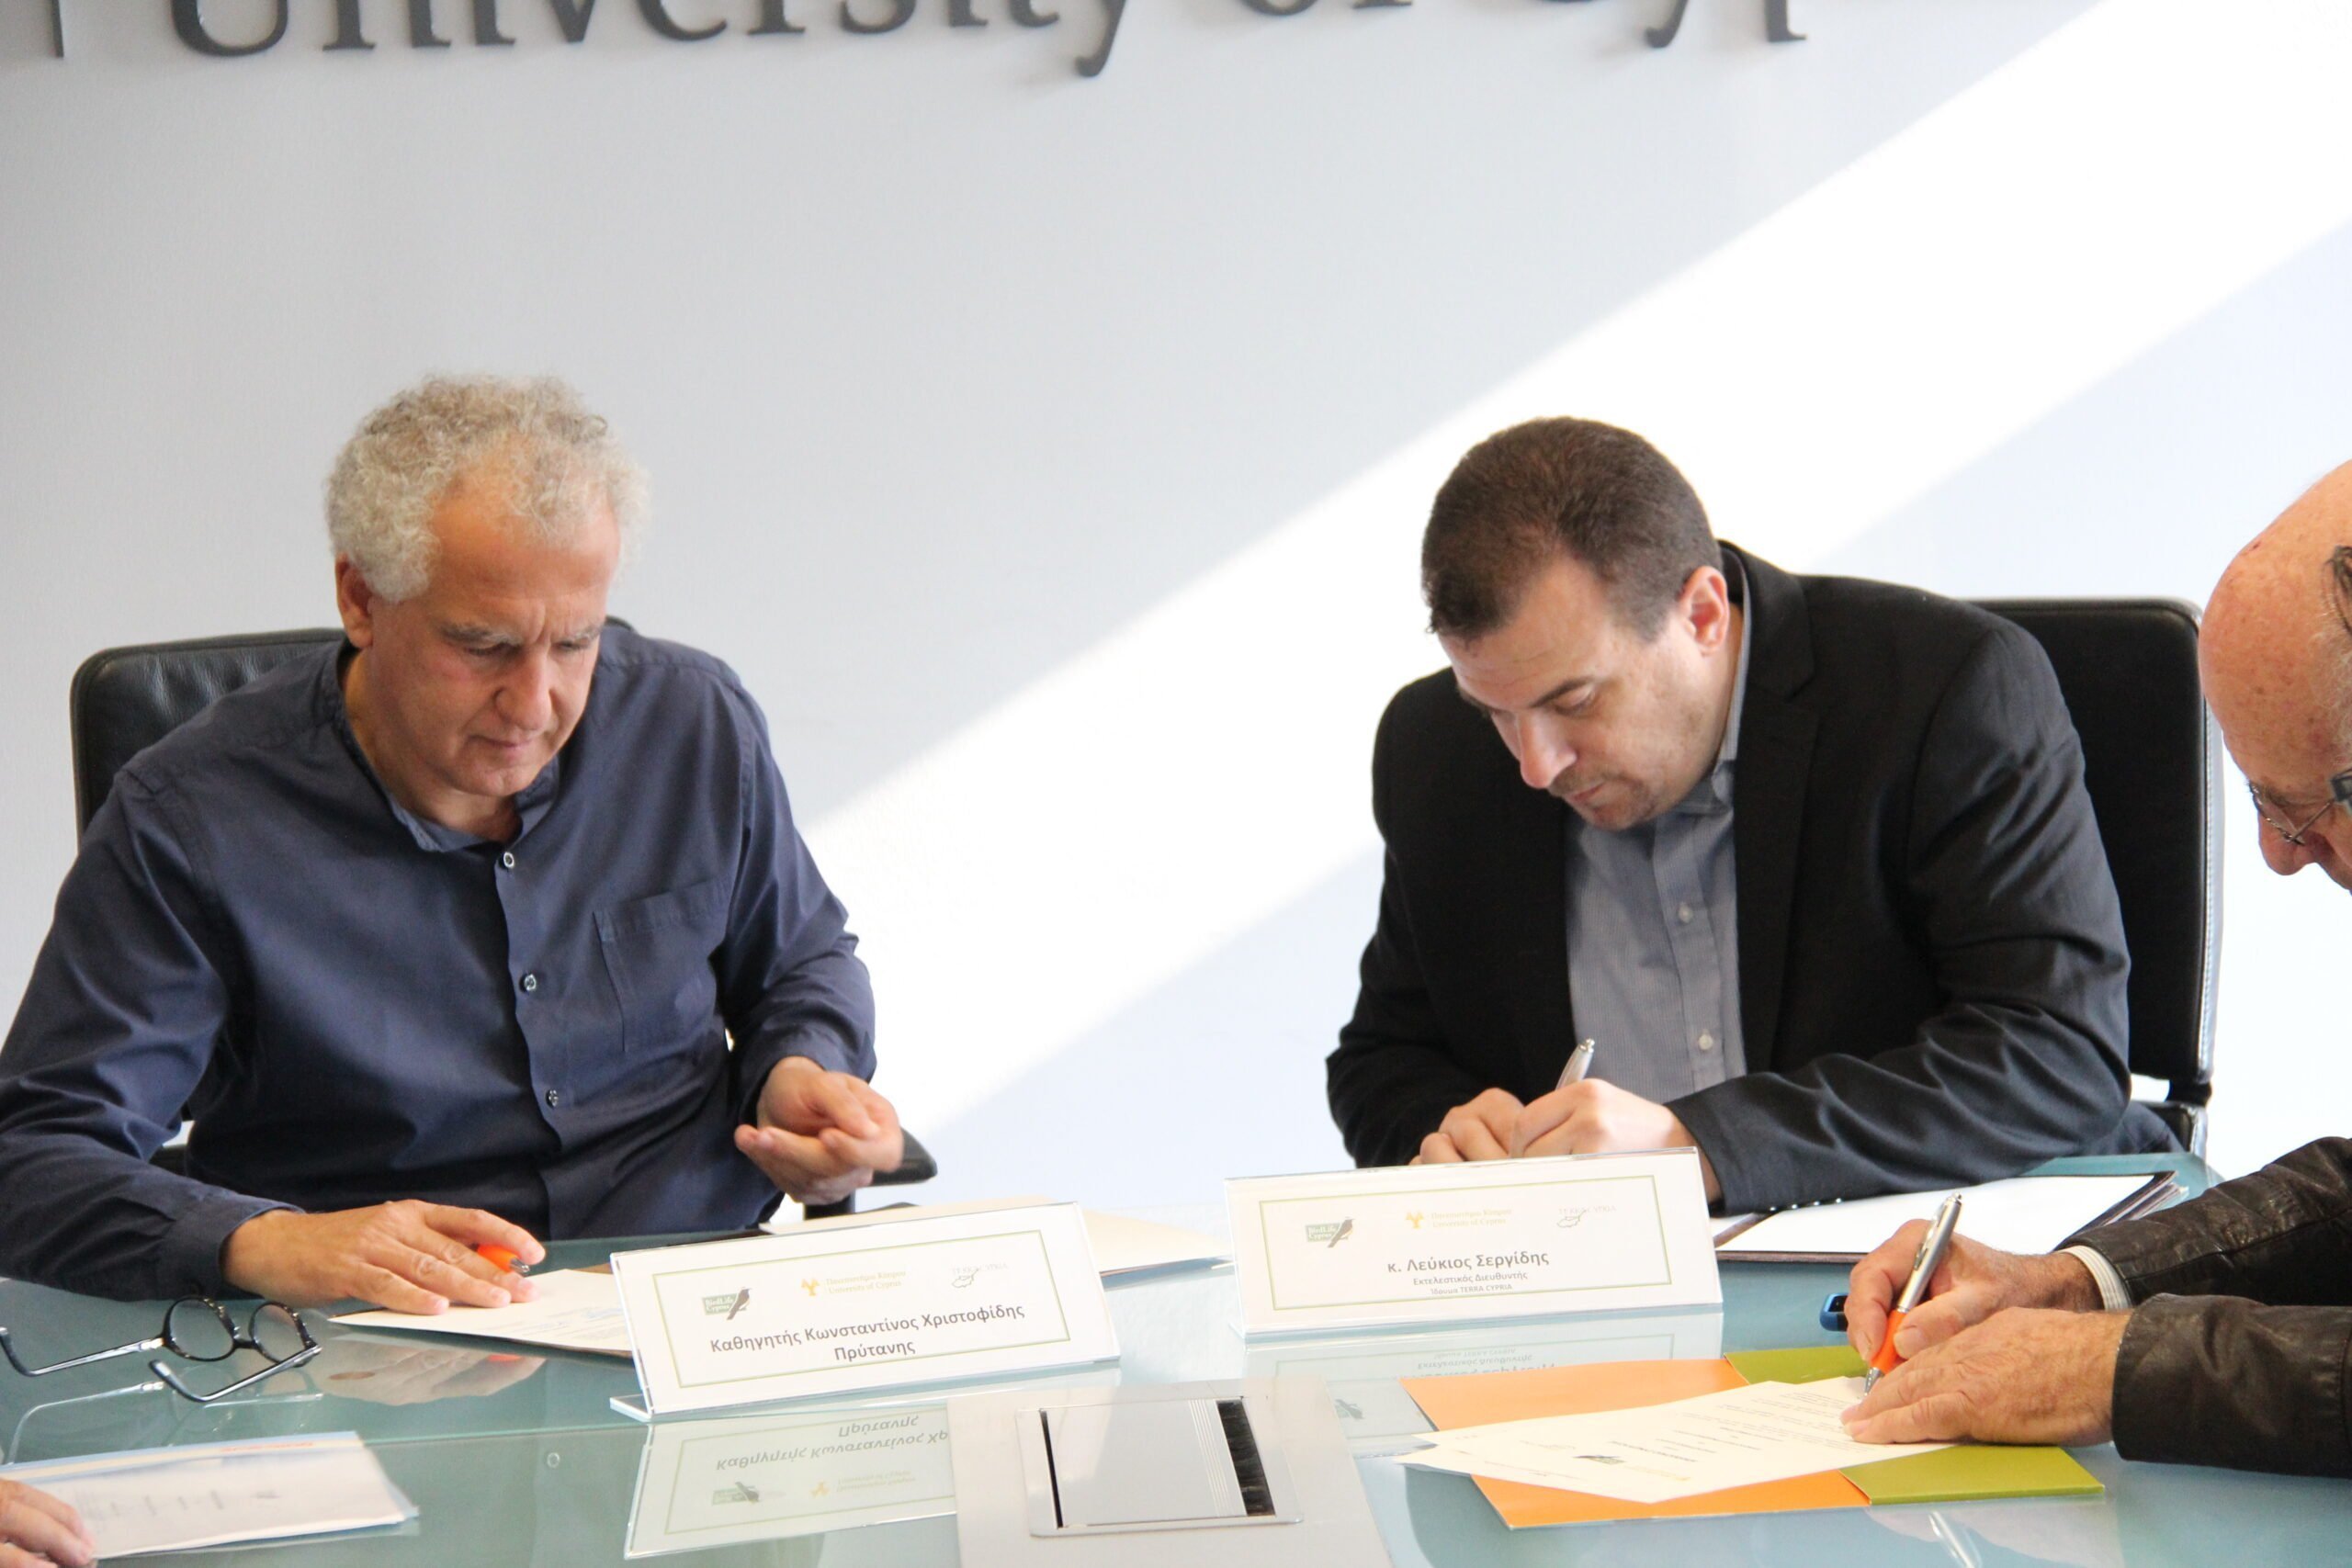 We signed a Memorandum of Understanding between the University of Cyprus and the BirdLife Cyprus